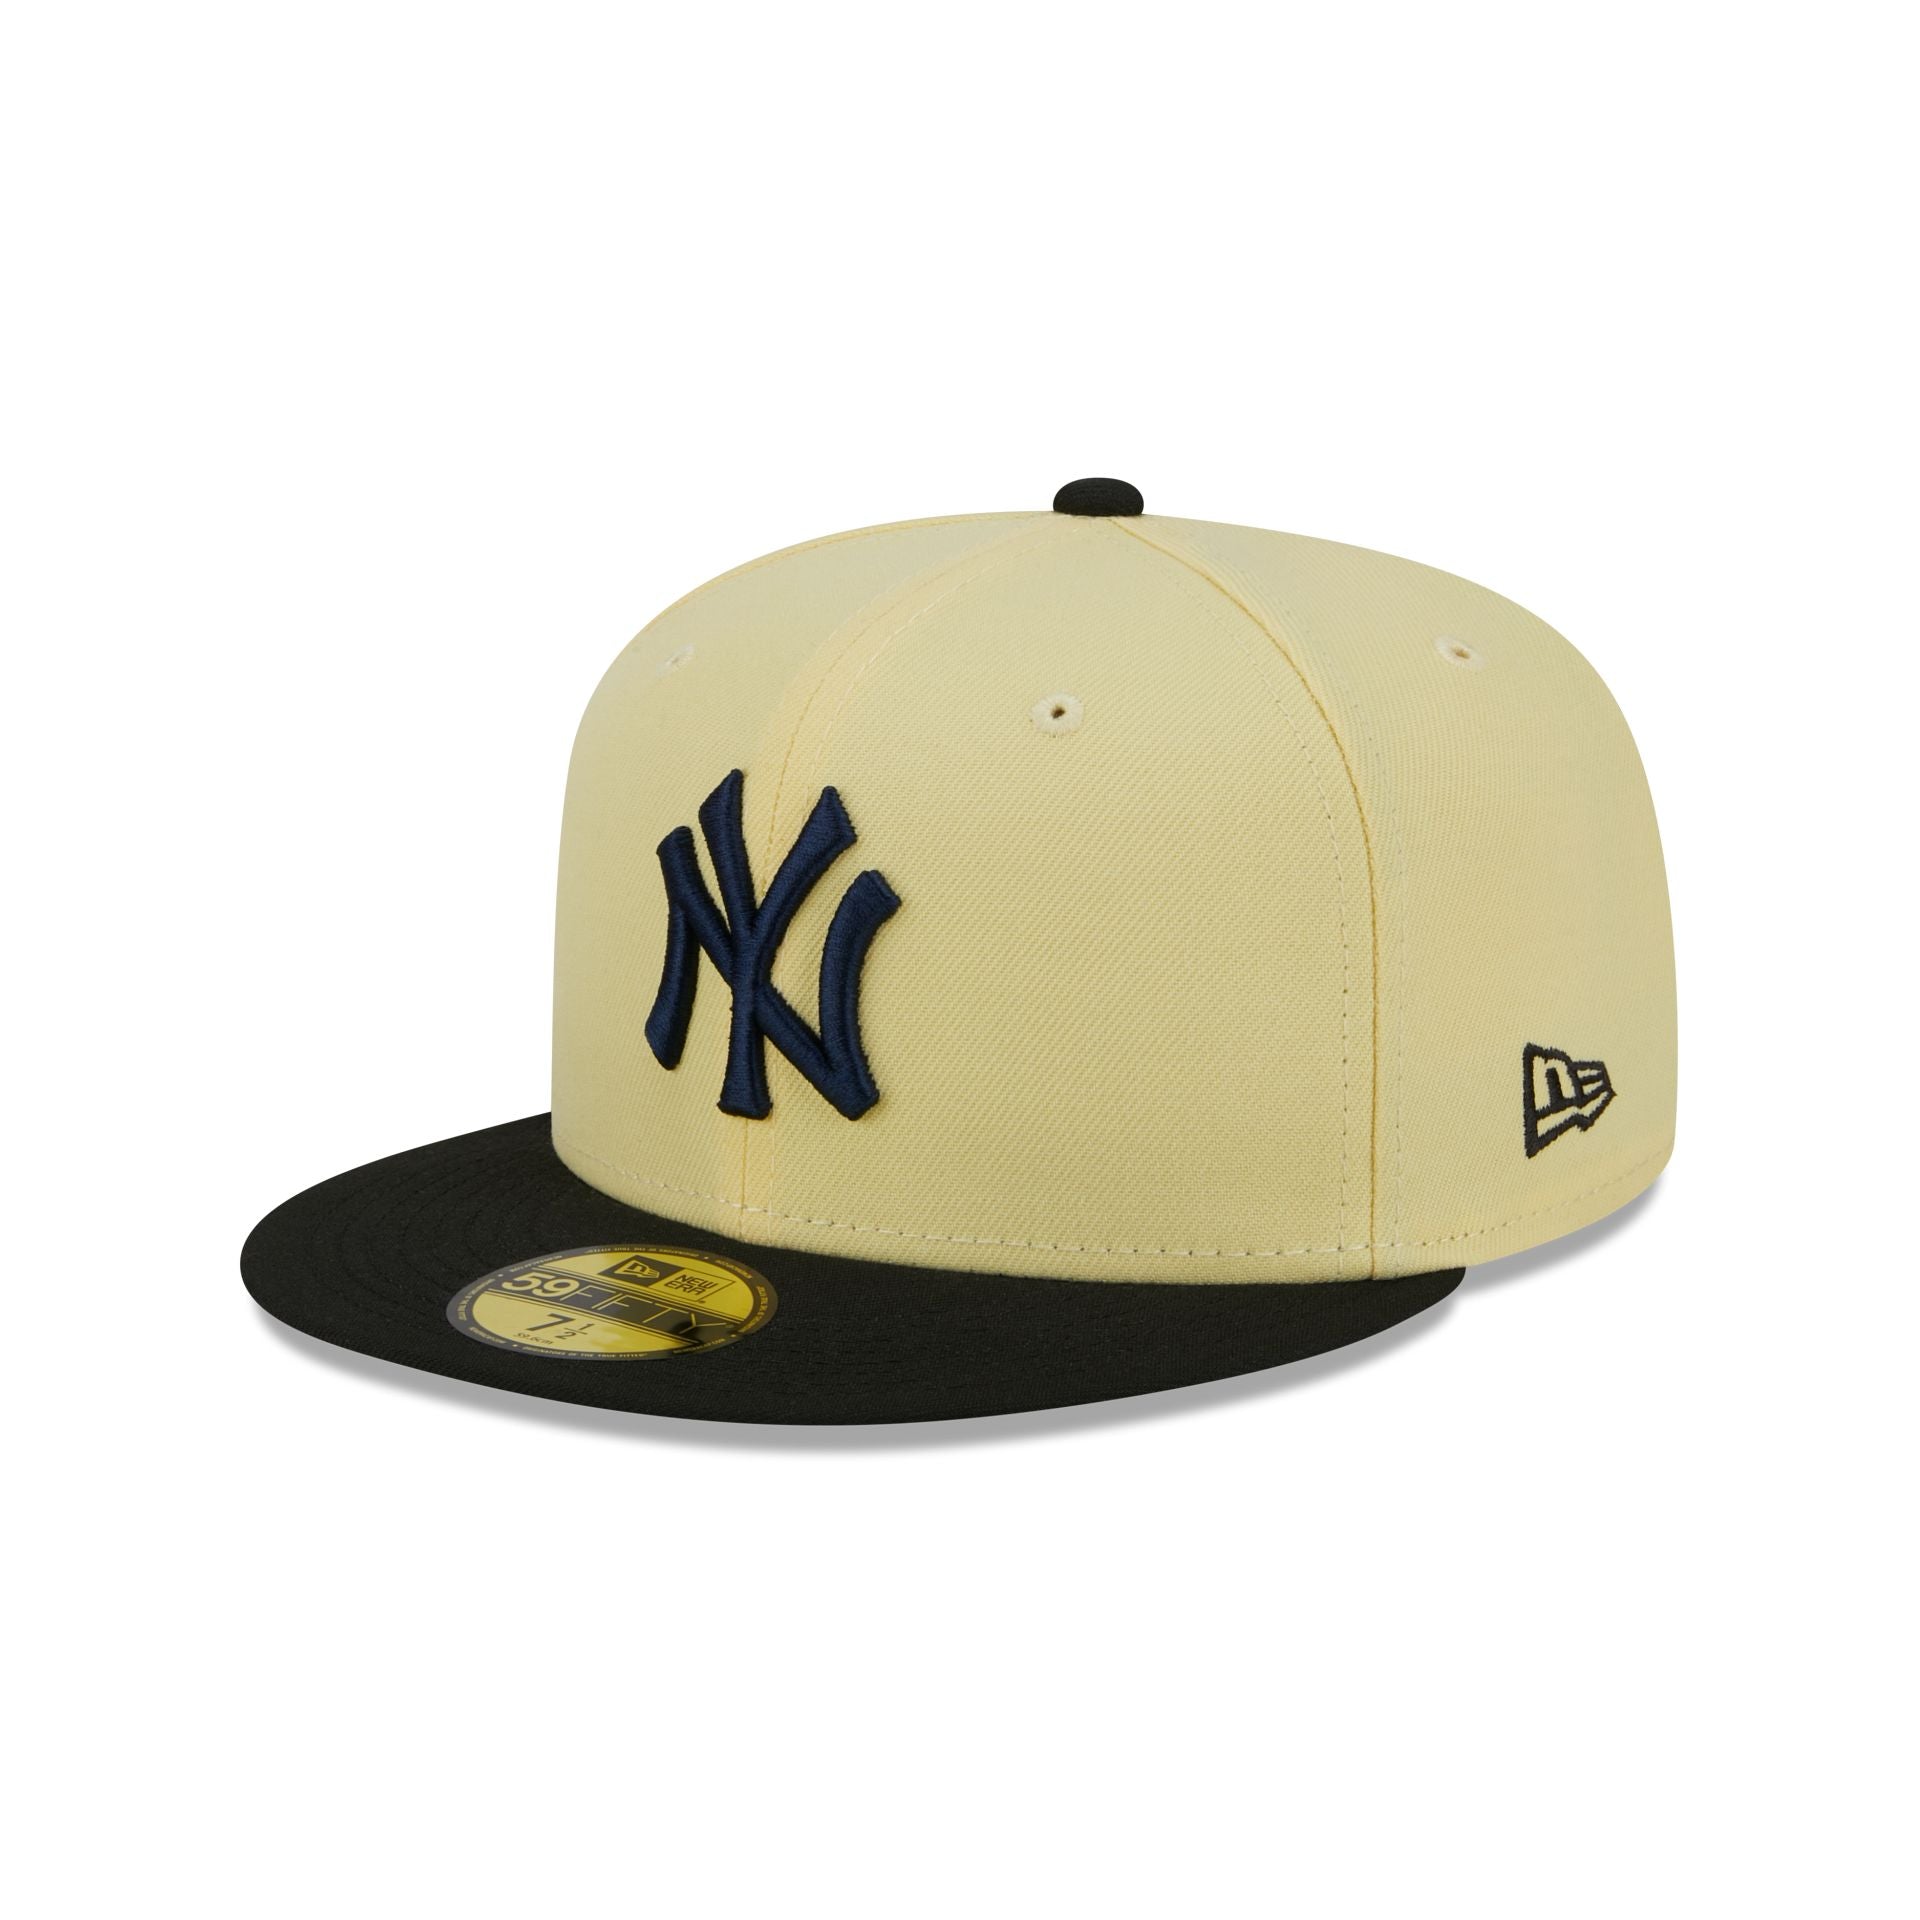 Atlanta Braves MLB Black & Yellow 9FIFTY Snapback Hat in Black/Yellow/Yellow by New Era